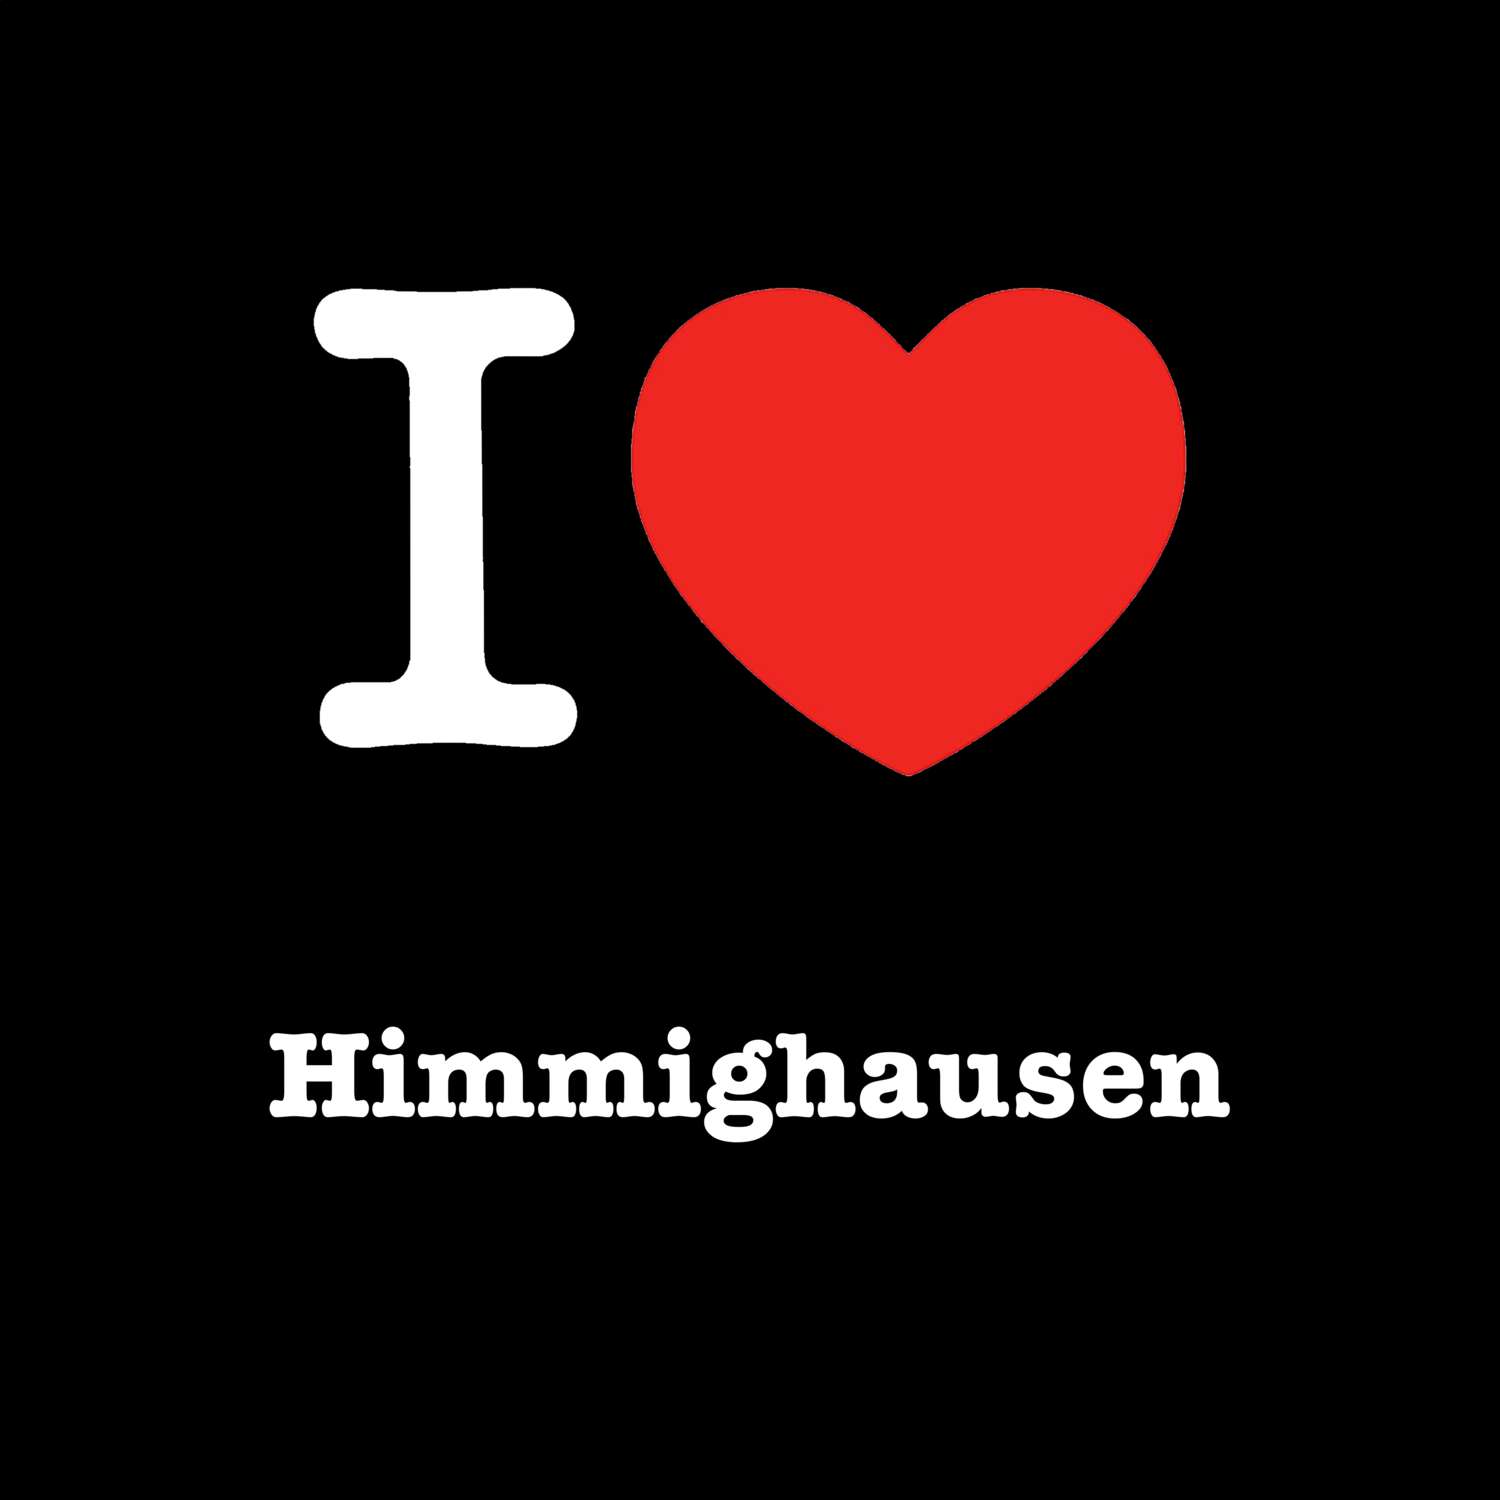 Himmighausen T-Shirt »I love«